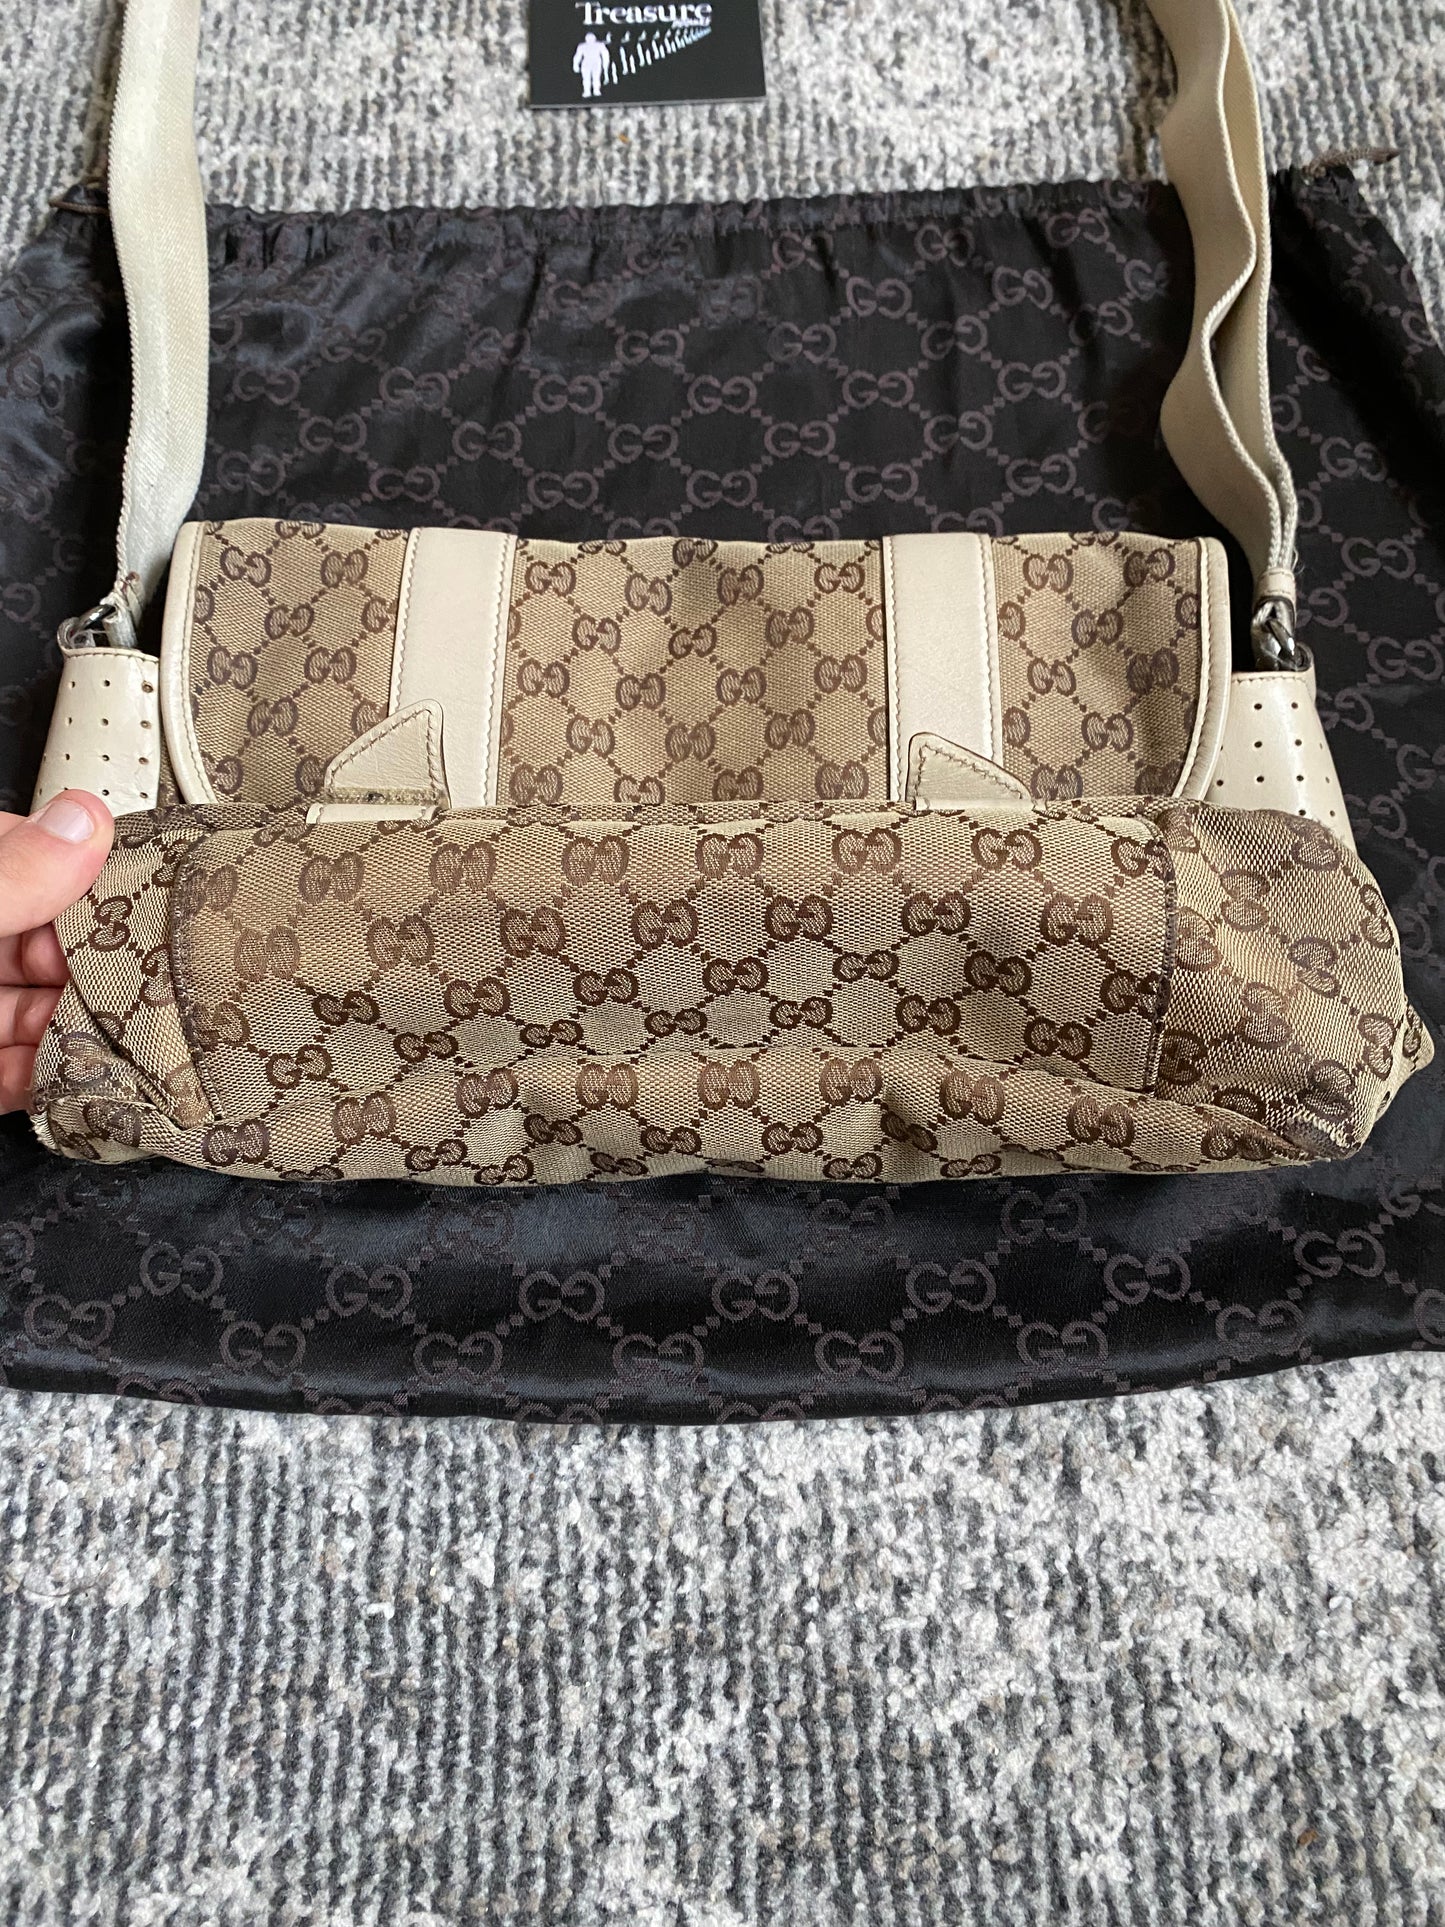 Gucci Messenger Bag